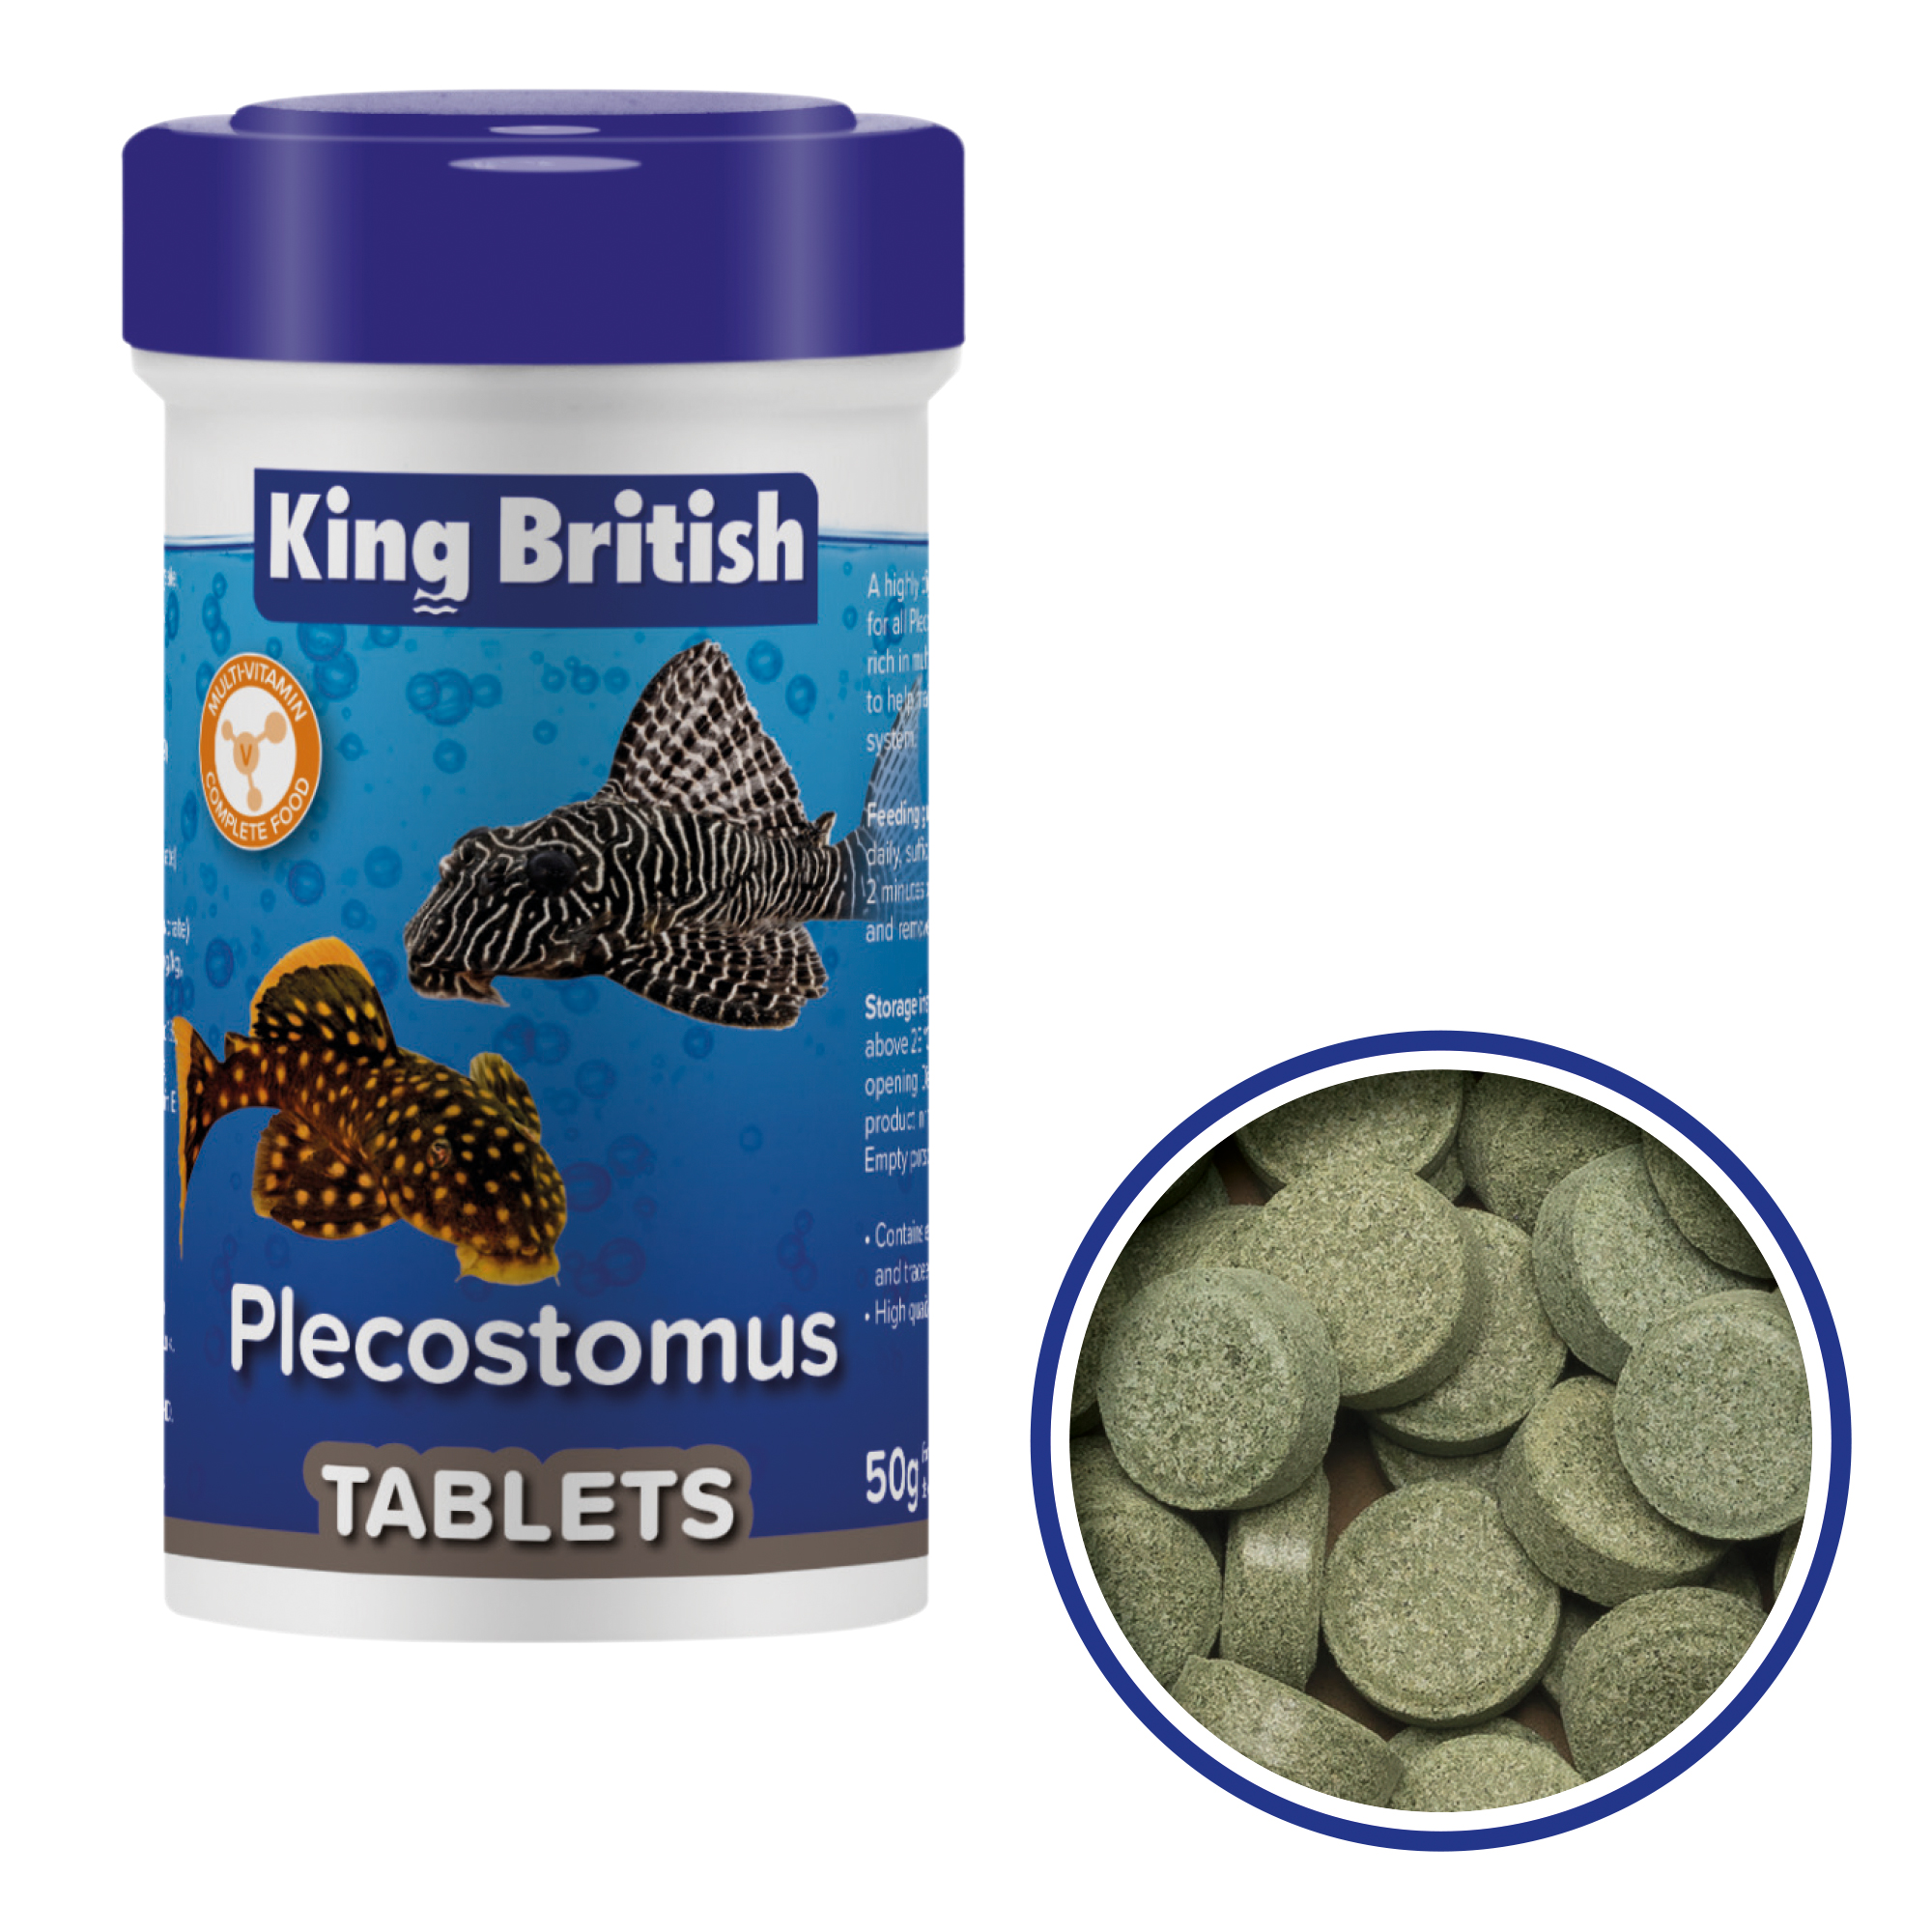 King British Plec tablets